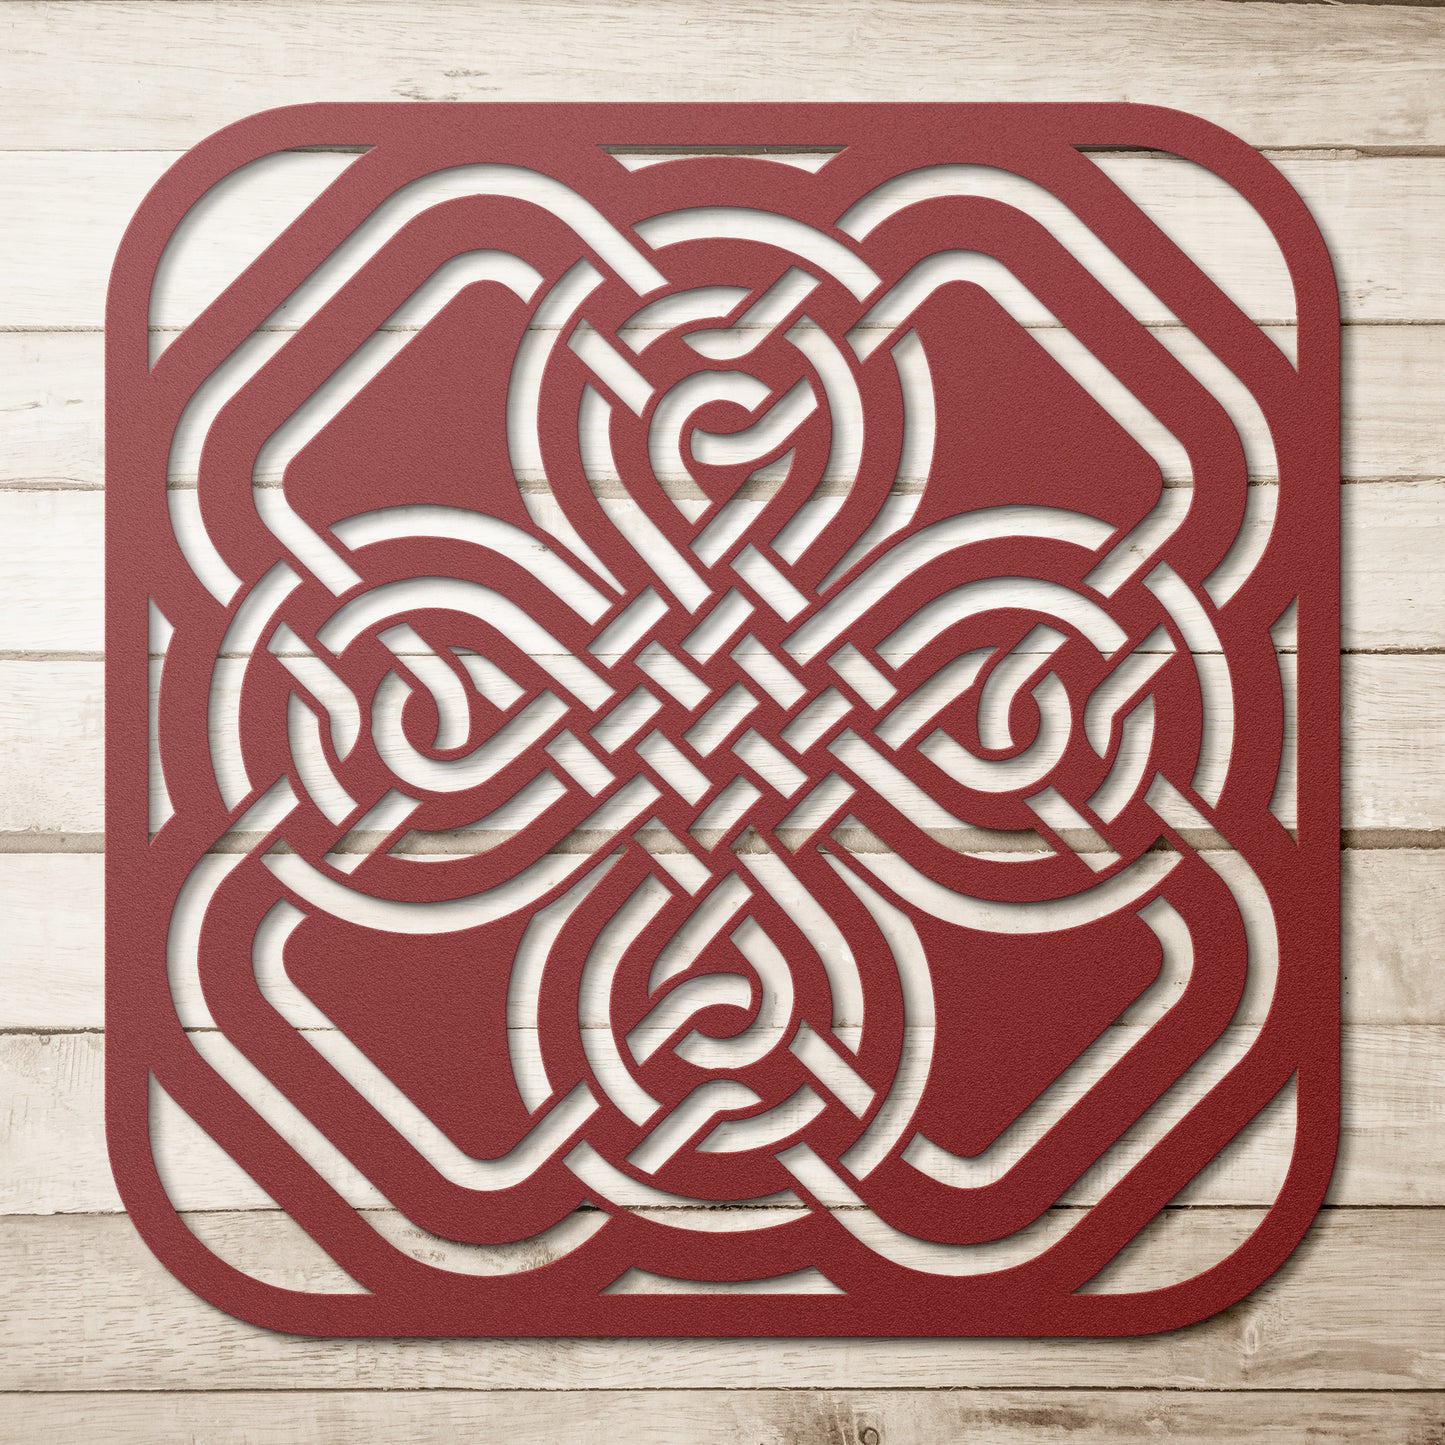 Framed Celtic Knots Design Metal Wall Art